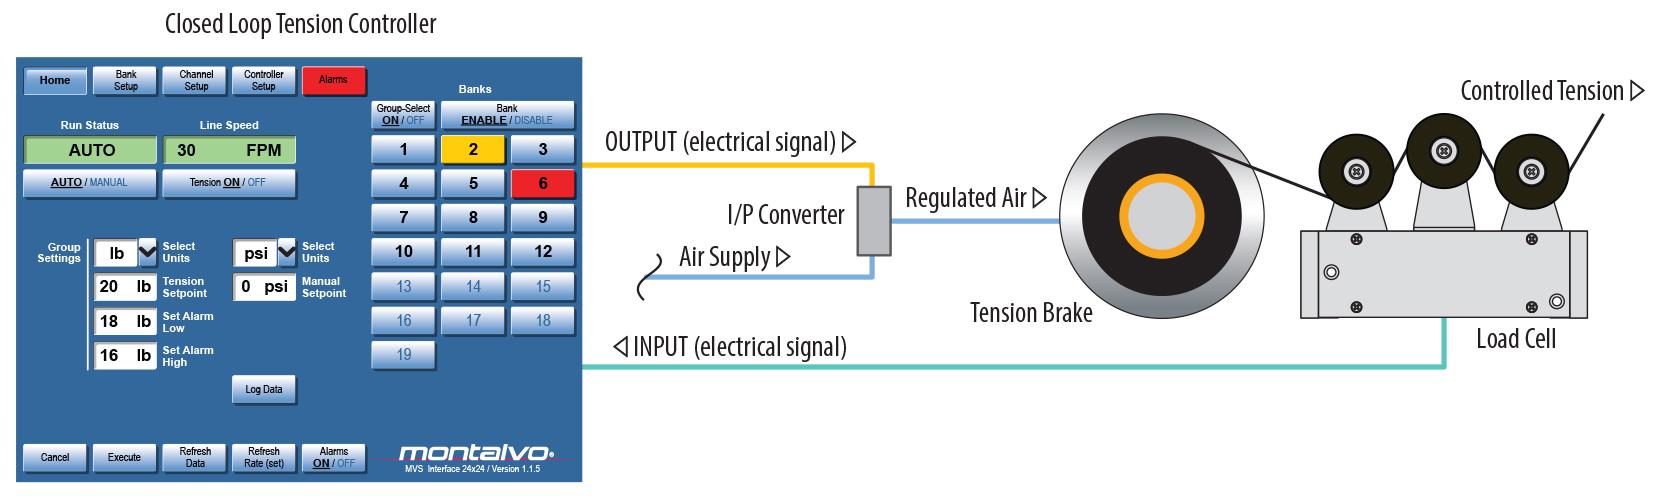 closed loop tow tension control system diagram